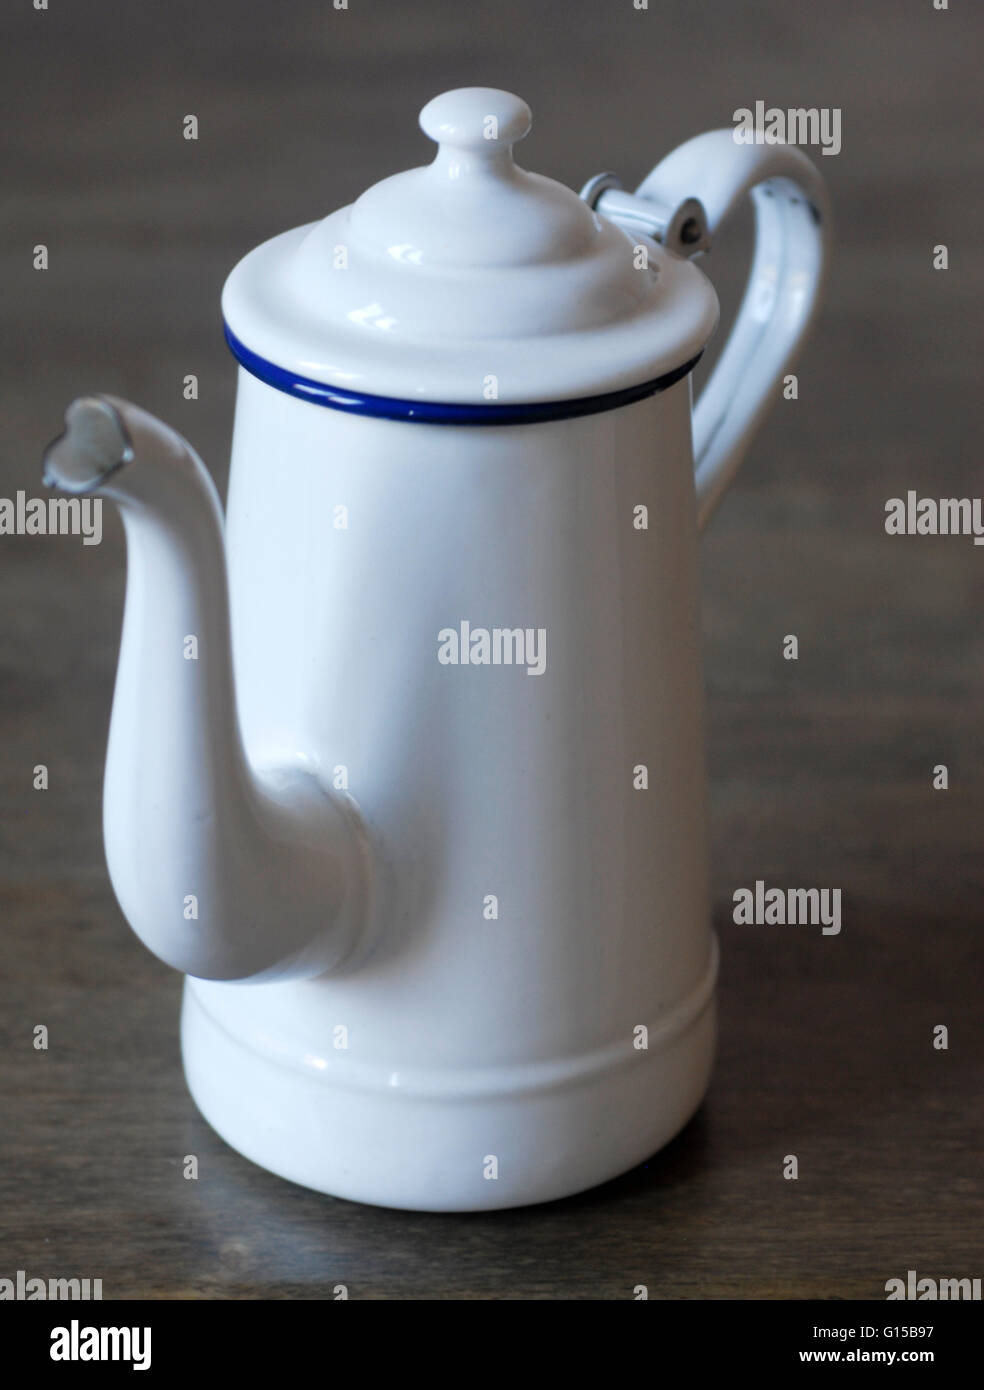 https://c8.alamy.com/comp/G15B97/enameled-teapot-pitcher-white-large-vintage-decoration-kitchen-enamel-G15B97.jpg